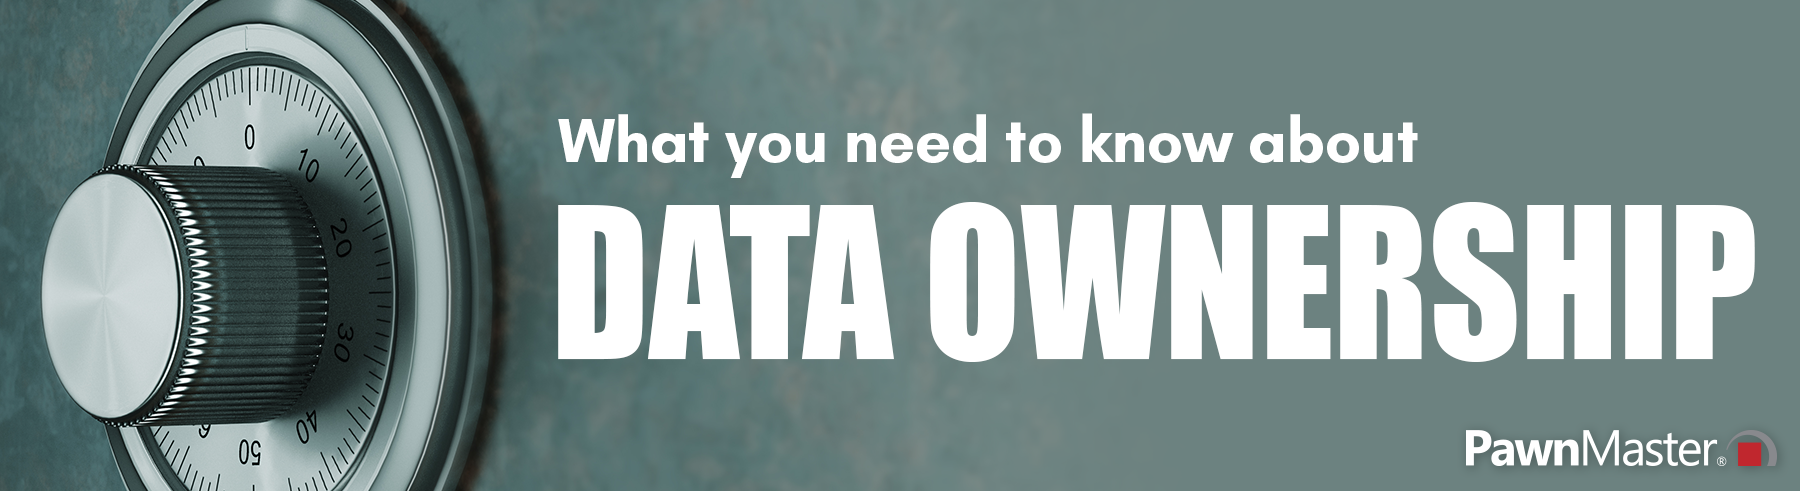 header-dataownership